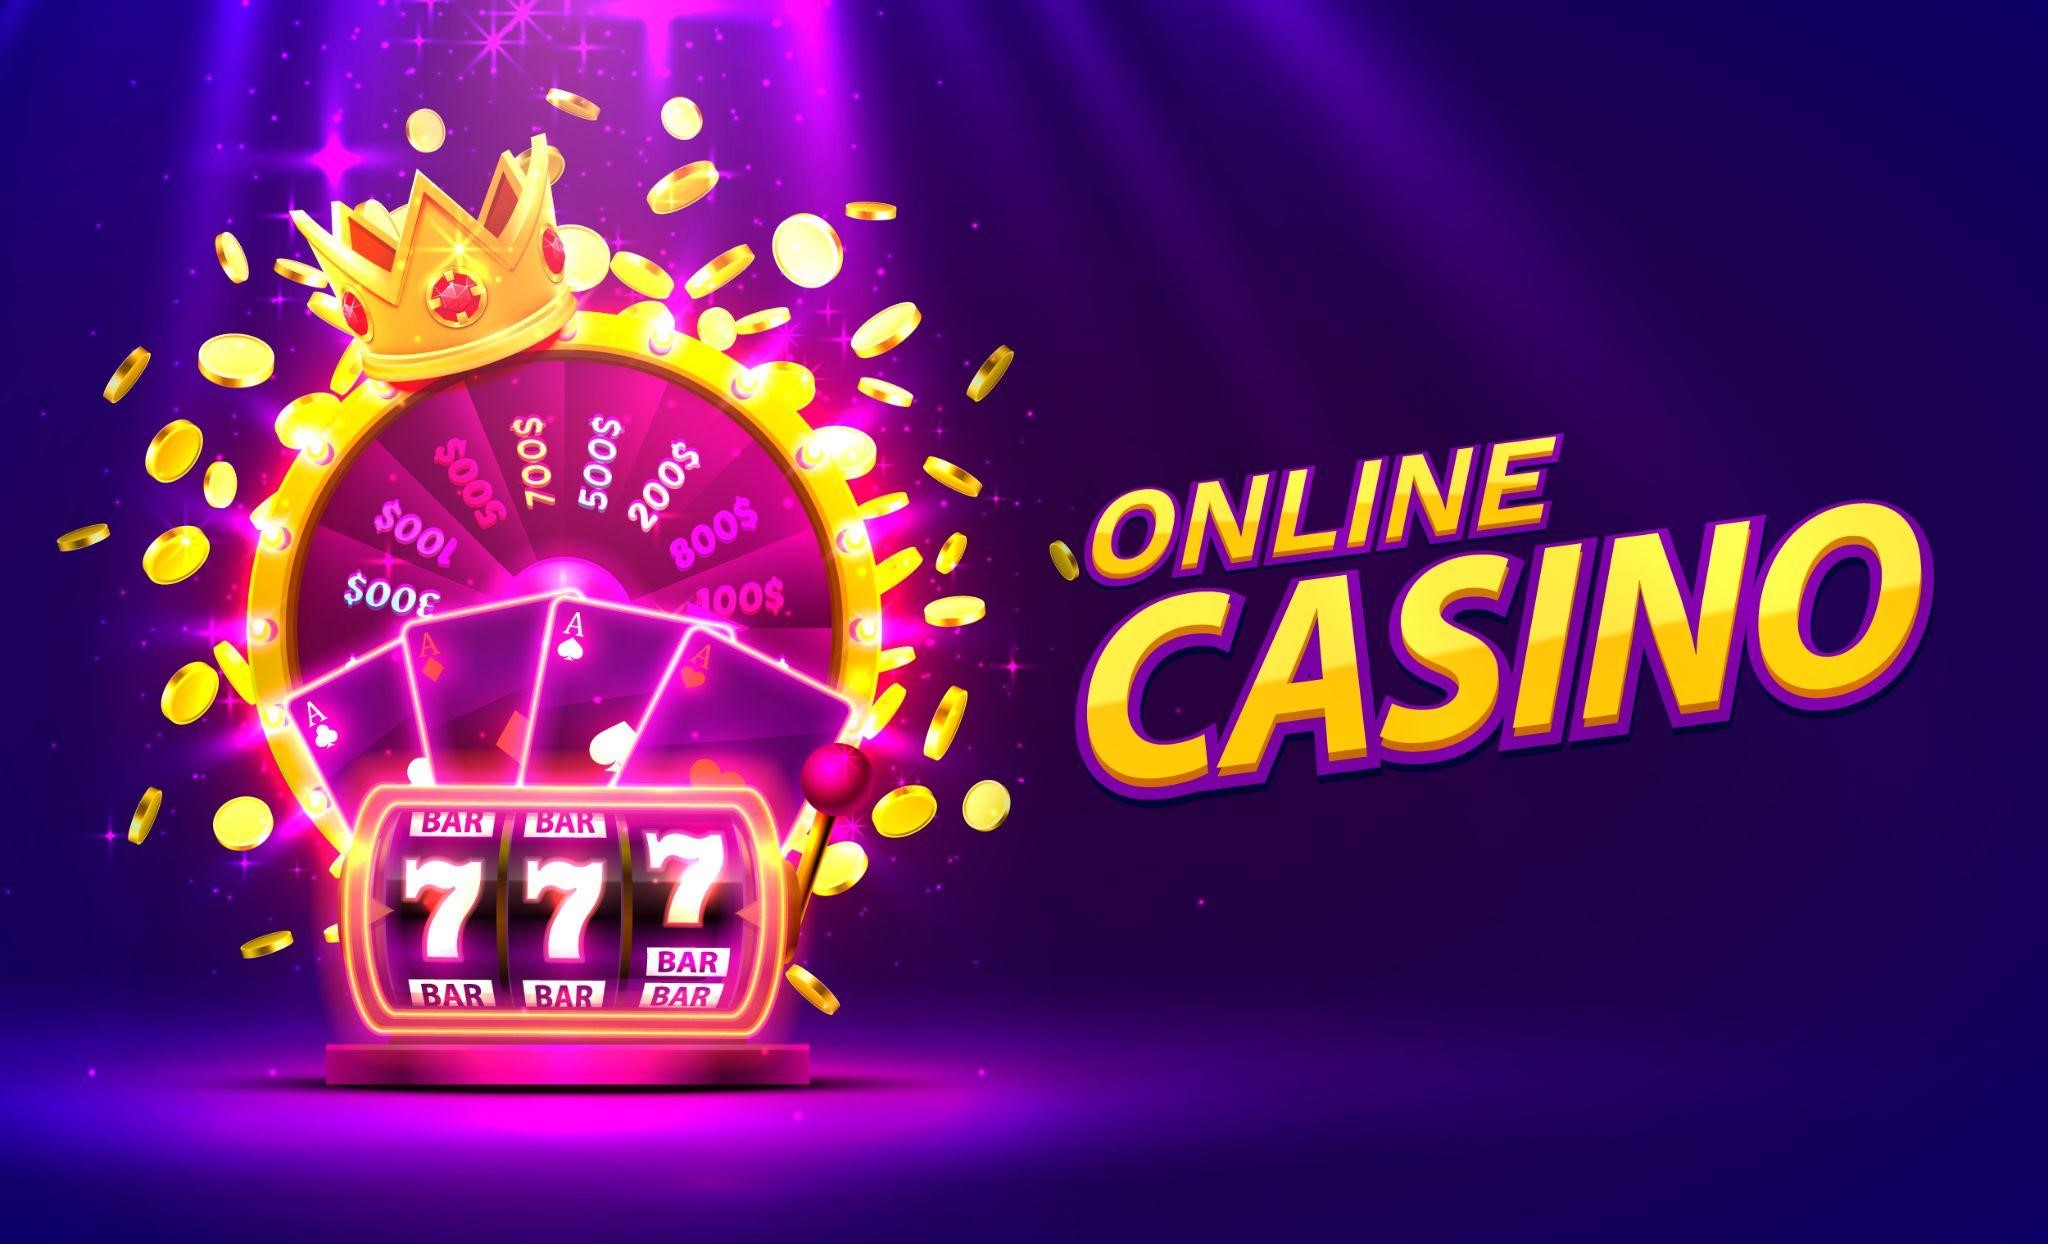 5 Attributes of Trustworthy Online Casino